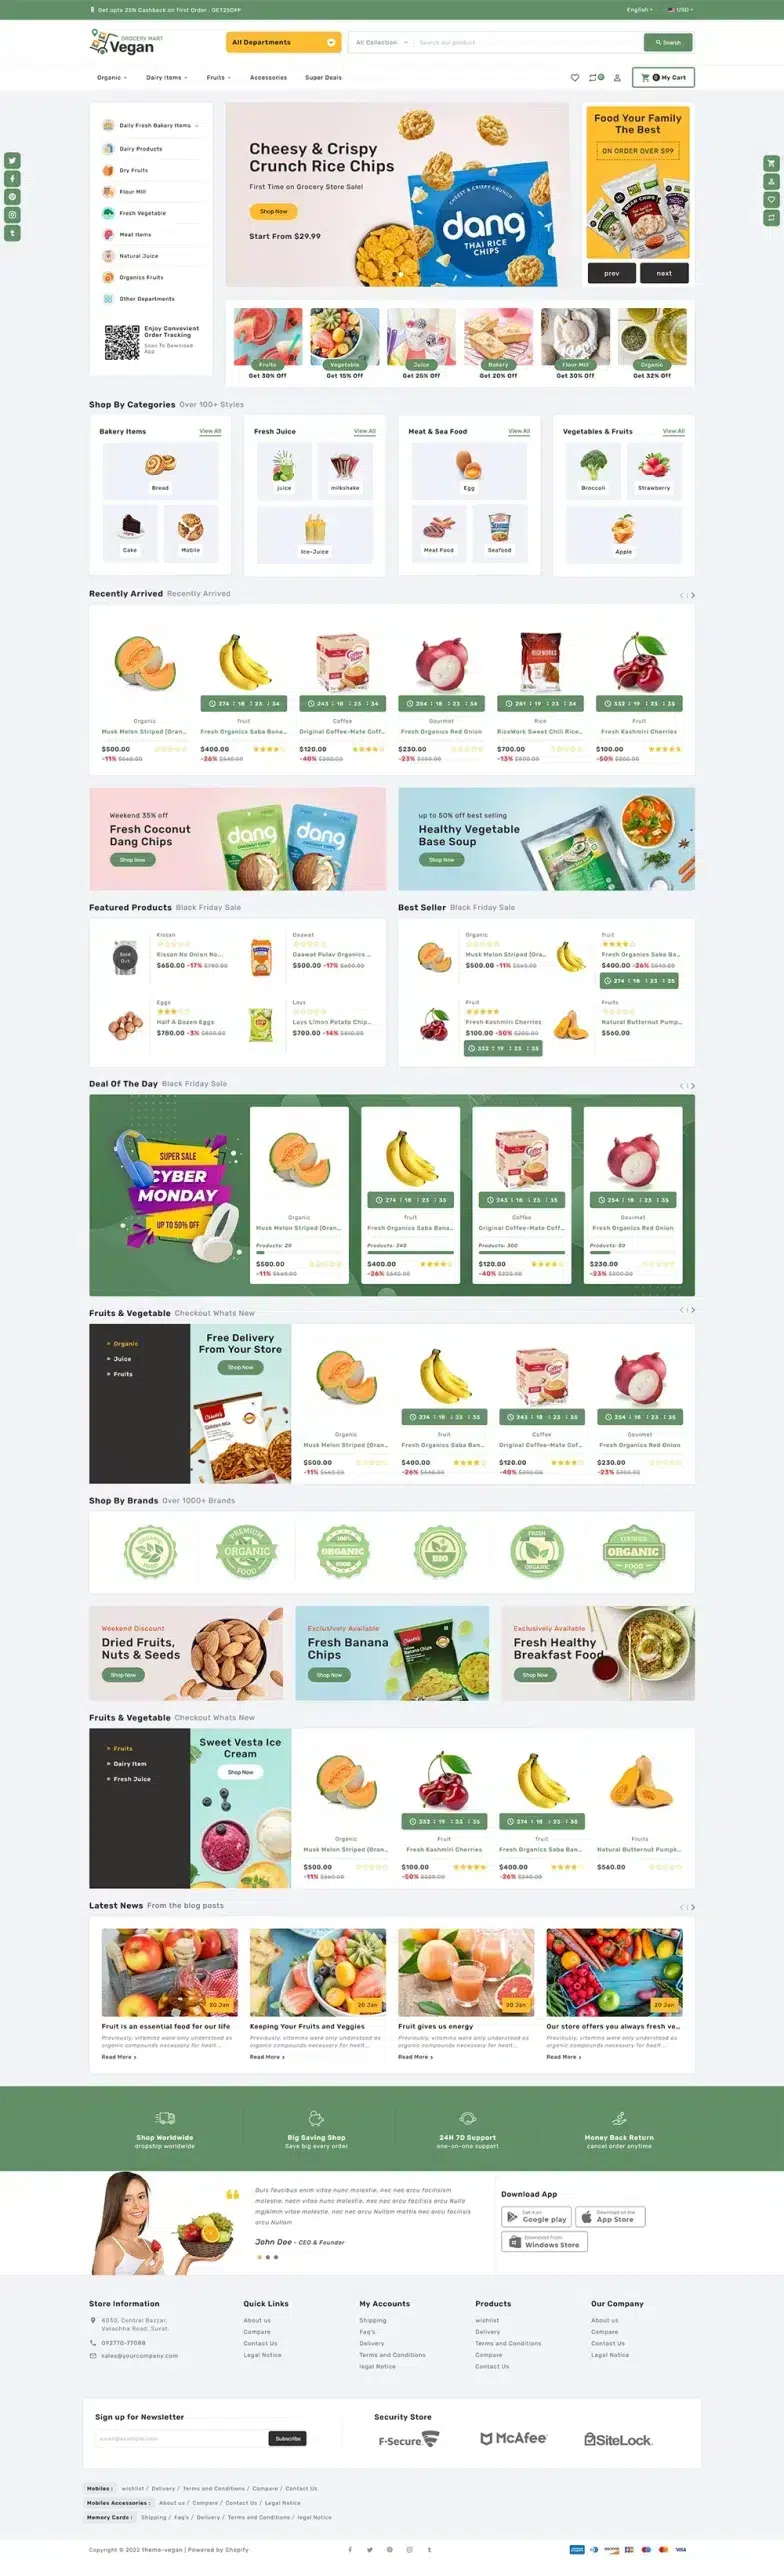 Vegan - Grocery & Organic Store - Shopify 2.0 Multipurpose Theme